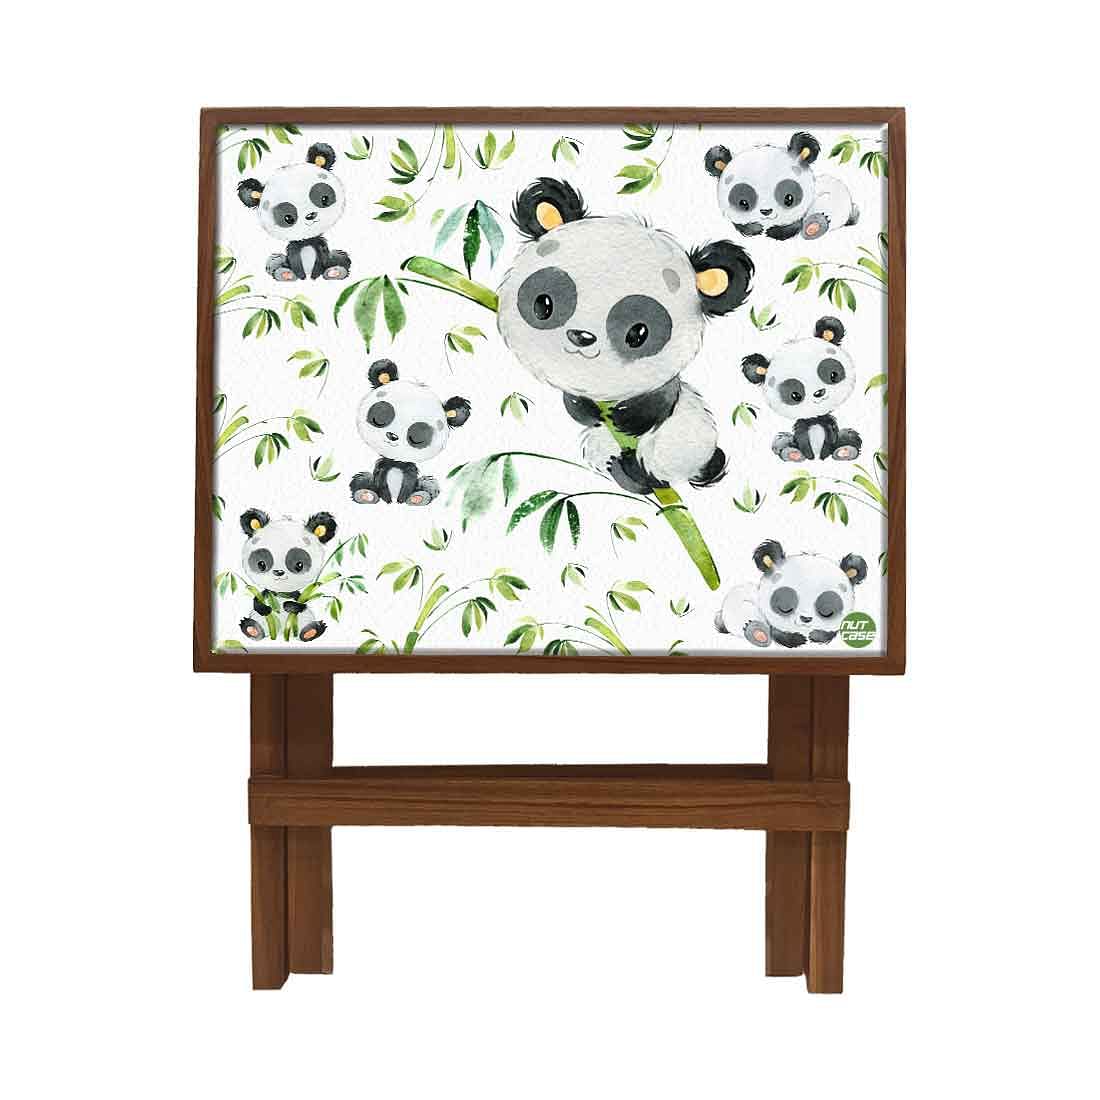 Nutcase Designer Teak Wood Side Table Folding Wooden Bedside Coffee Outdoor Picnic Table - Cute Panda Nutcase